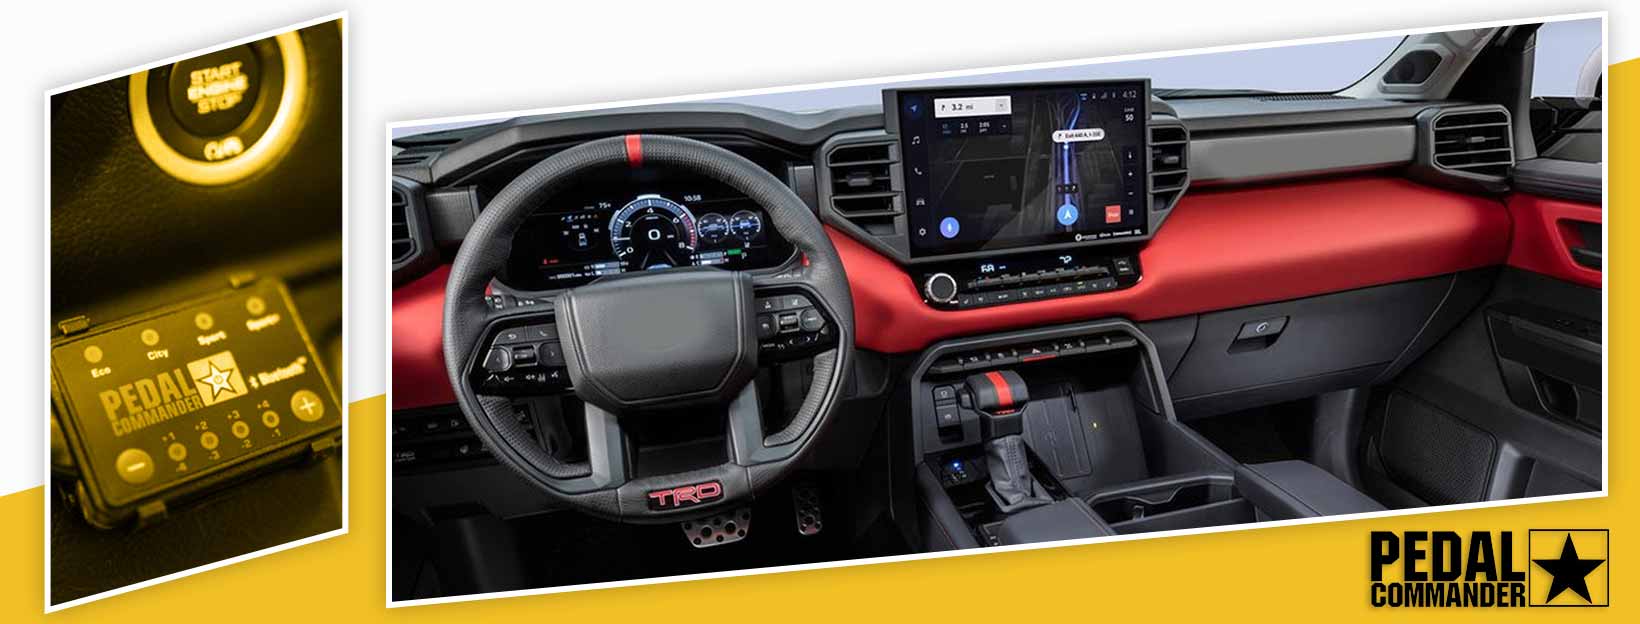 Pedal Commander for Toyota Tundra - interior